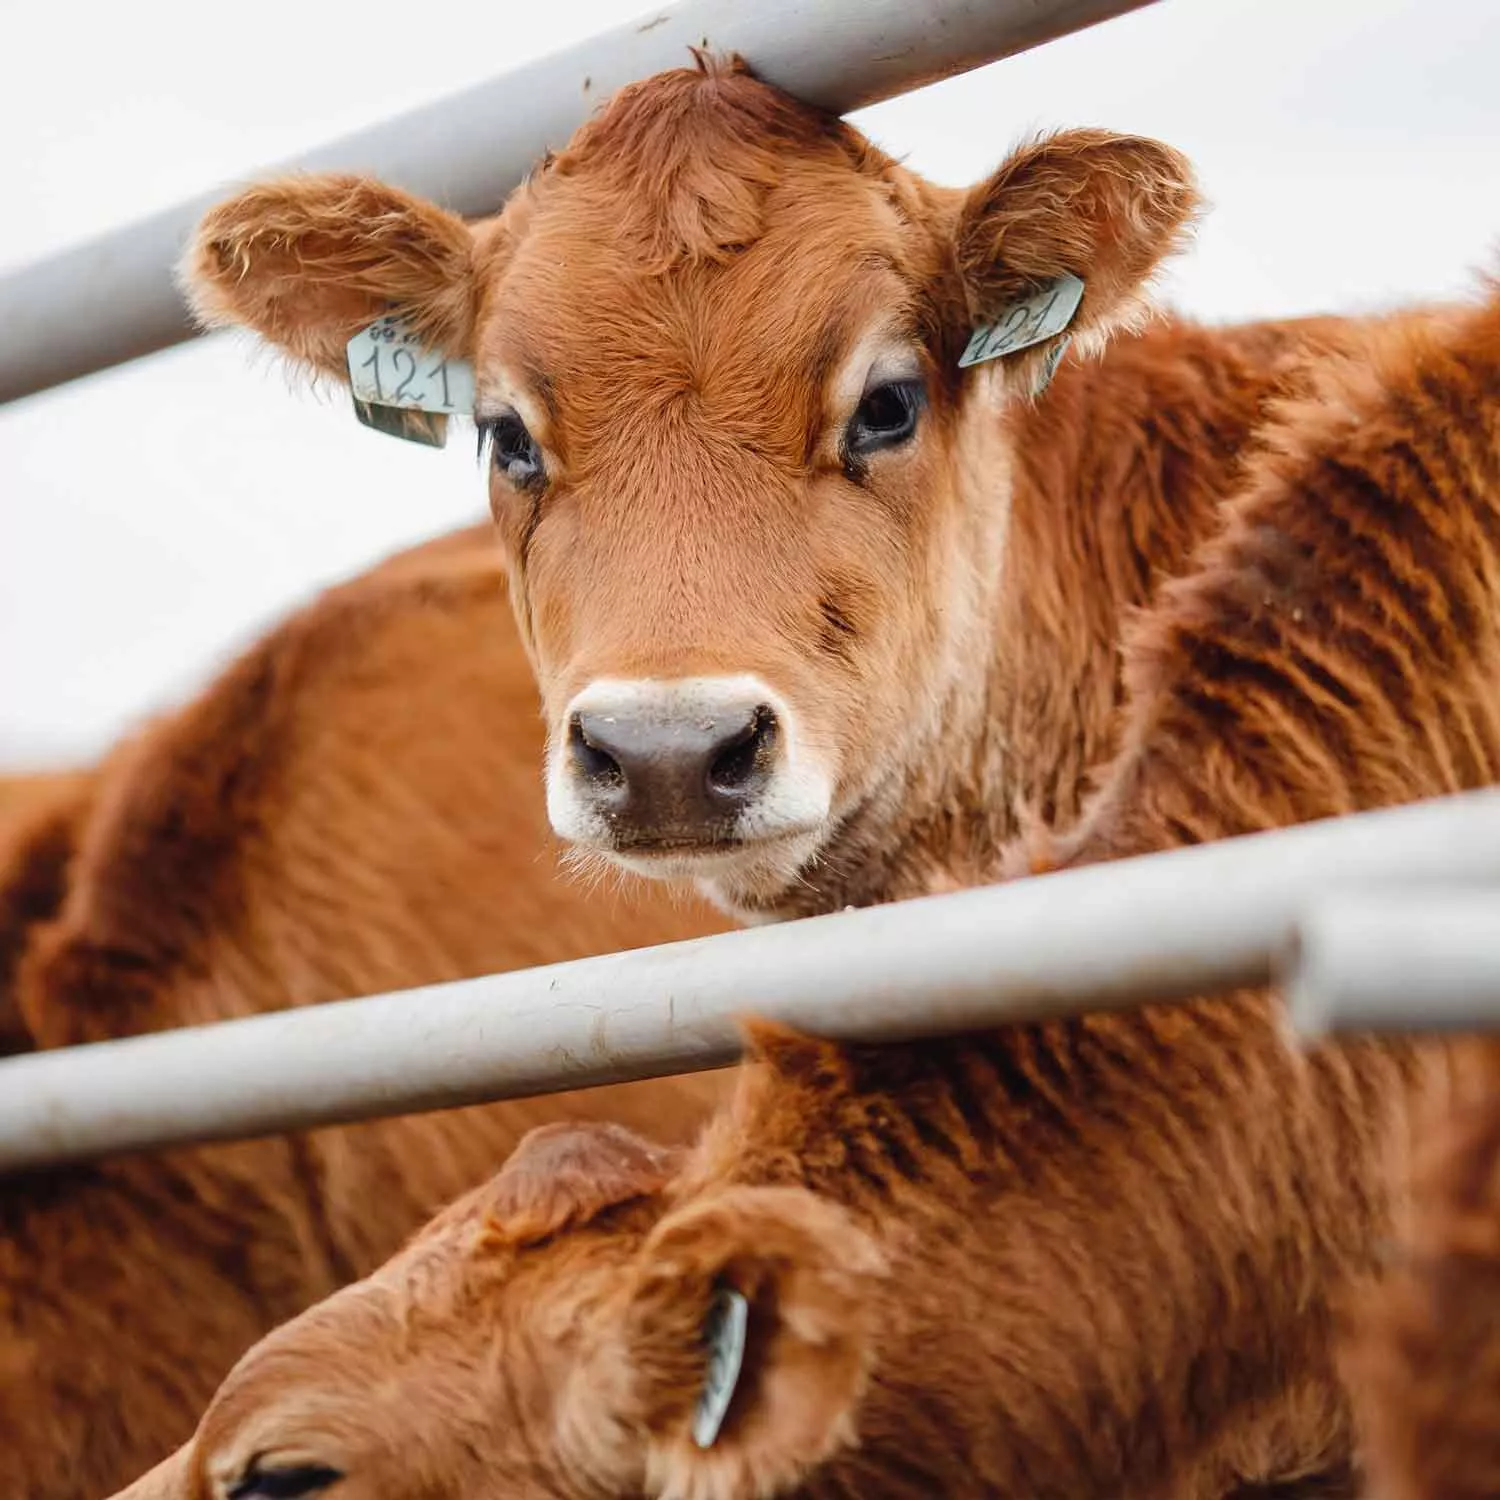 Historic news: United Kingdom bans live animal export in landmark decision